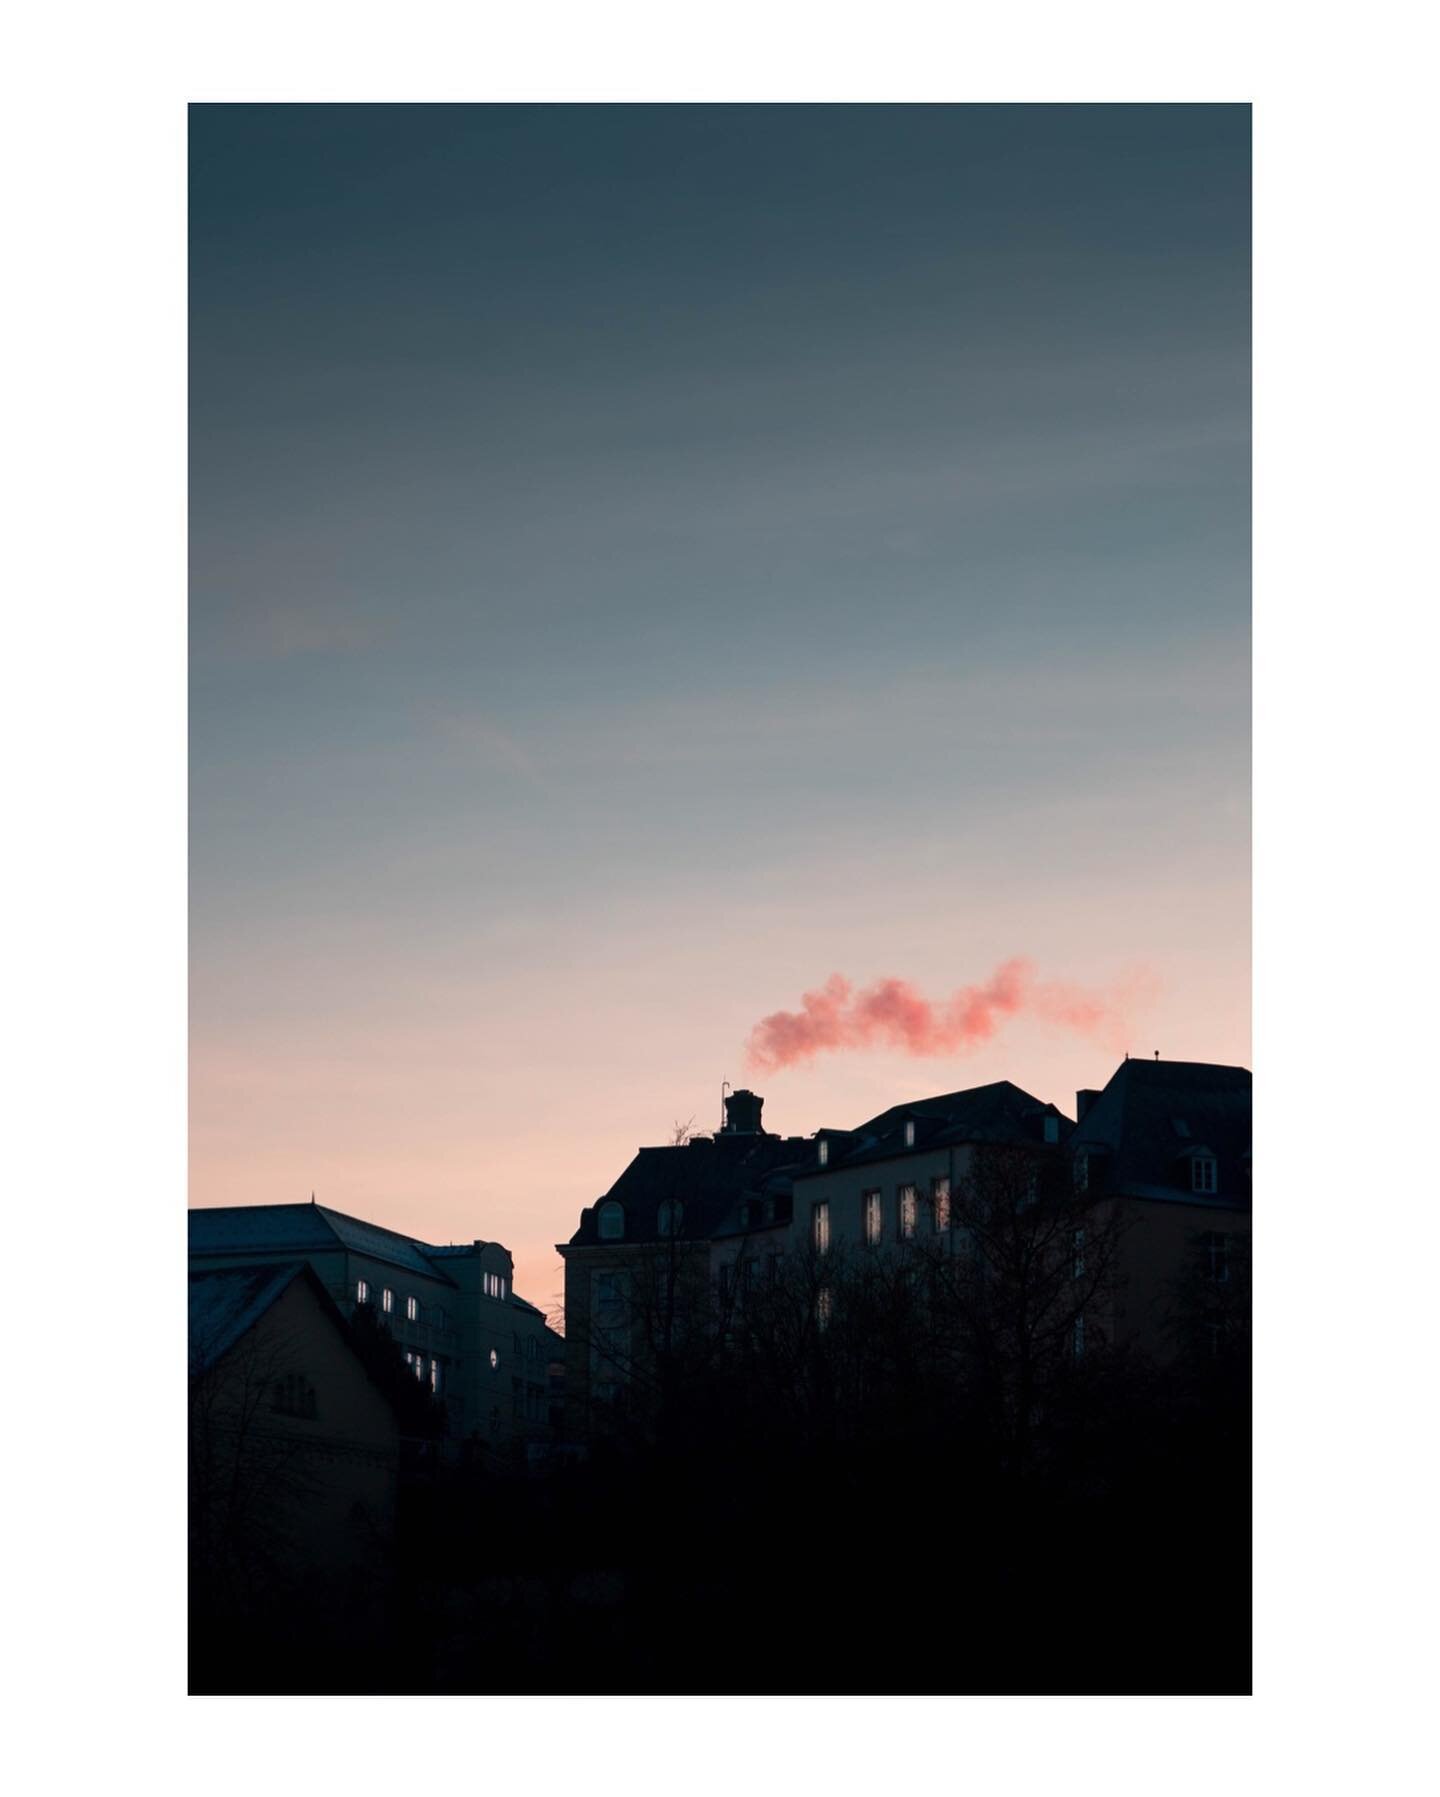 Am Nom&euml;tteg duerch d'Stad trellen 🌝
.
.
.
.
#canoneosrp #streetphotography #photography #canon #canoneos #lightroom #sunset #moodyphotography